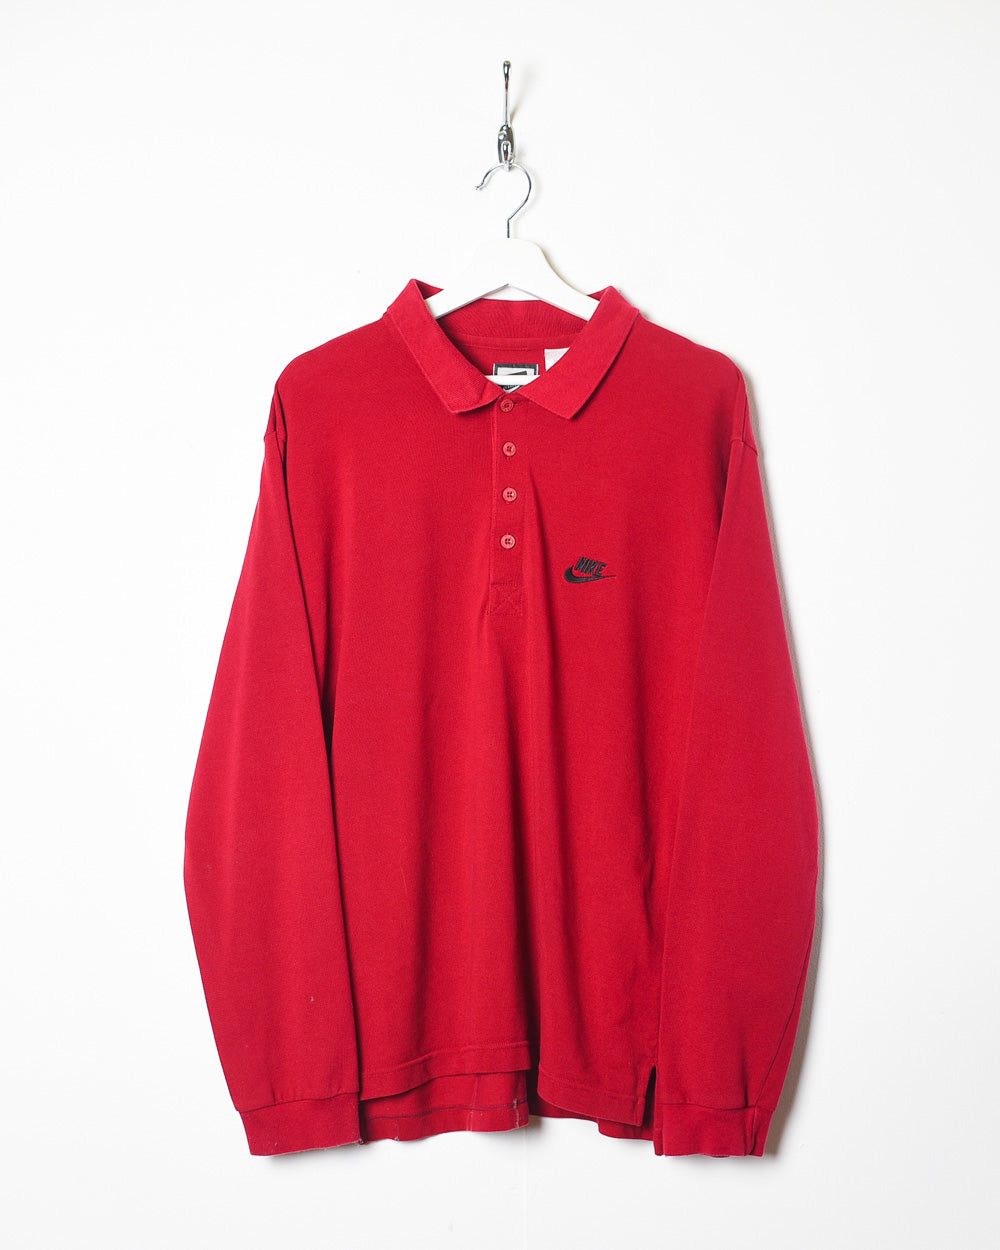 Red Nike 80s Long Sleeved Polo Shirt - Medium